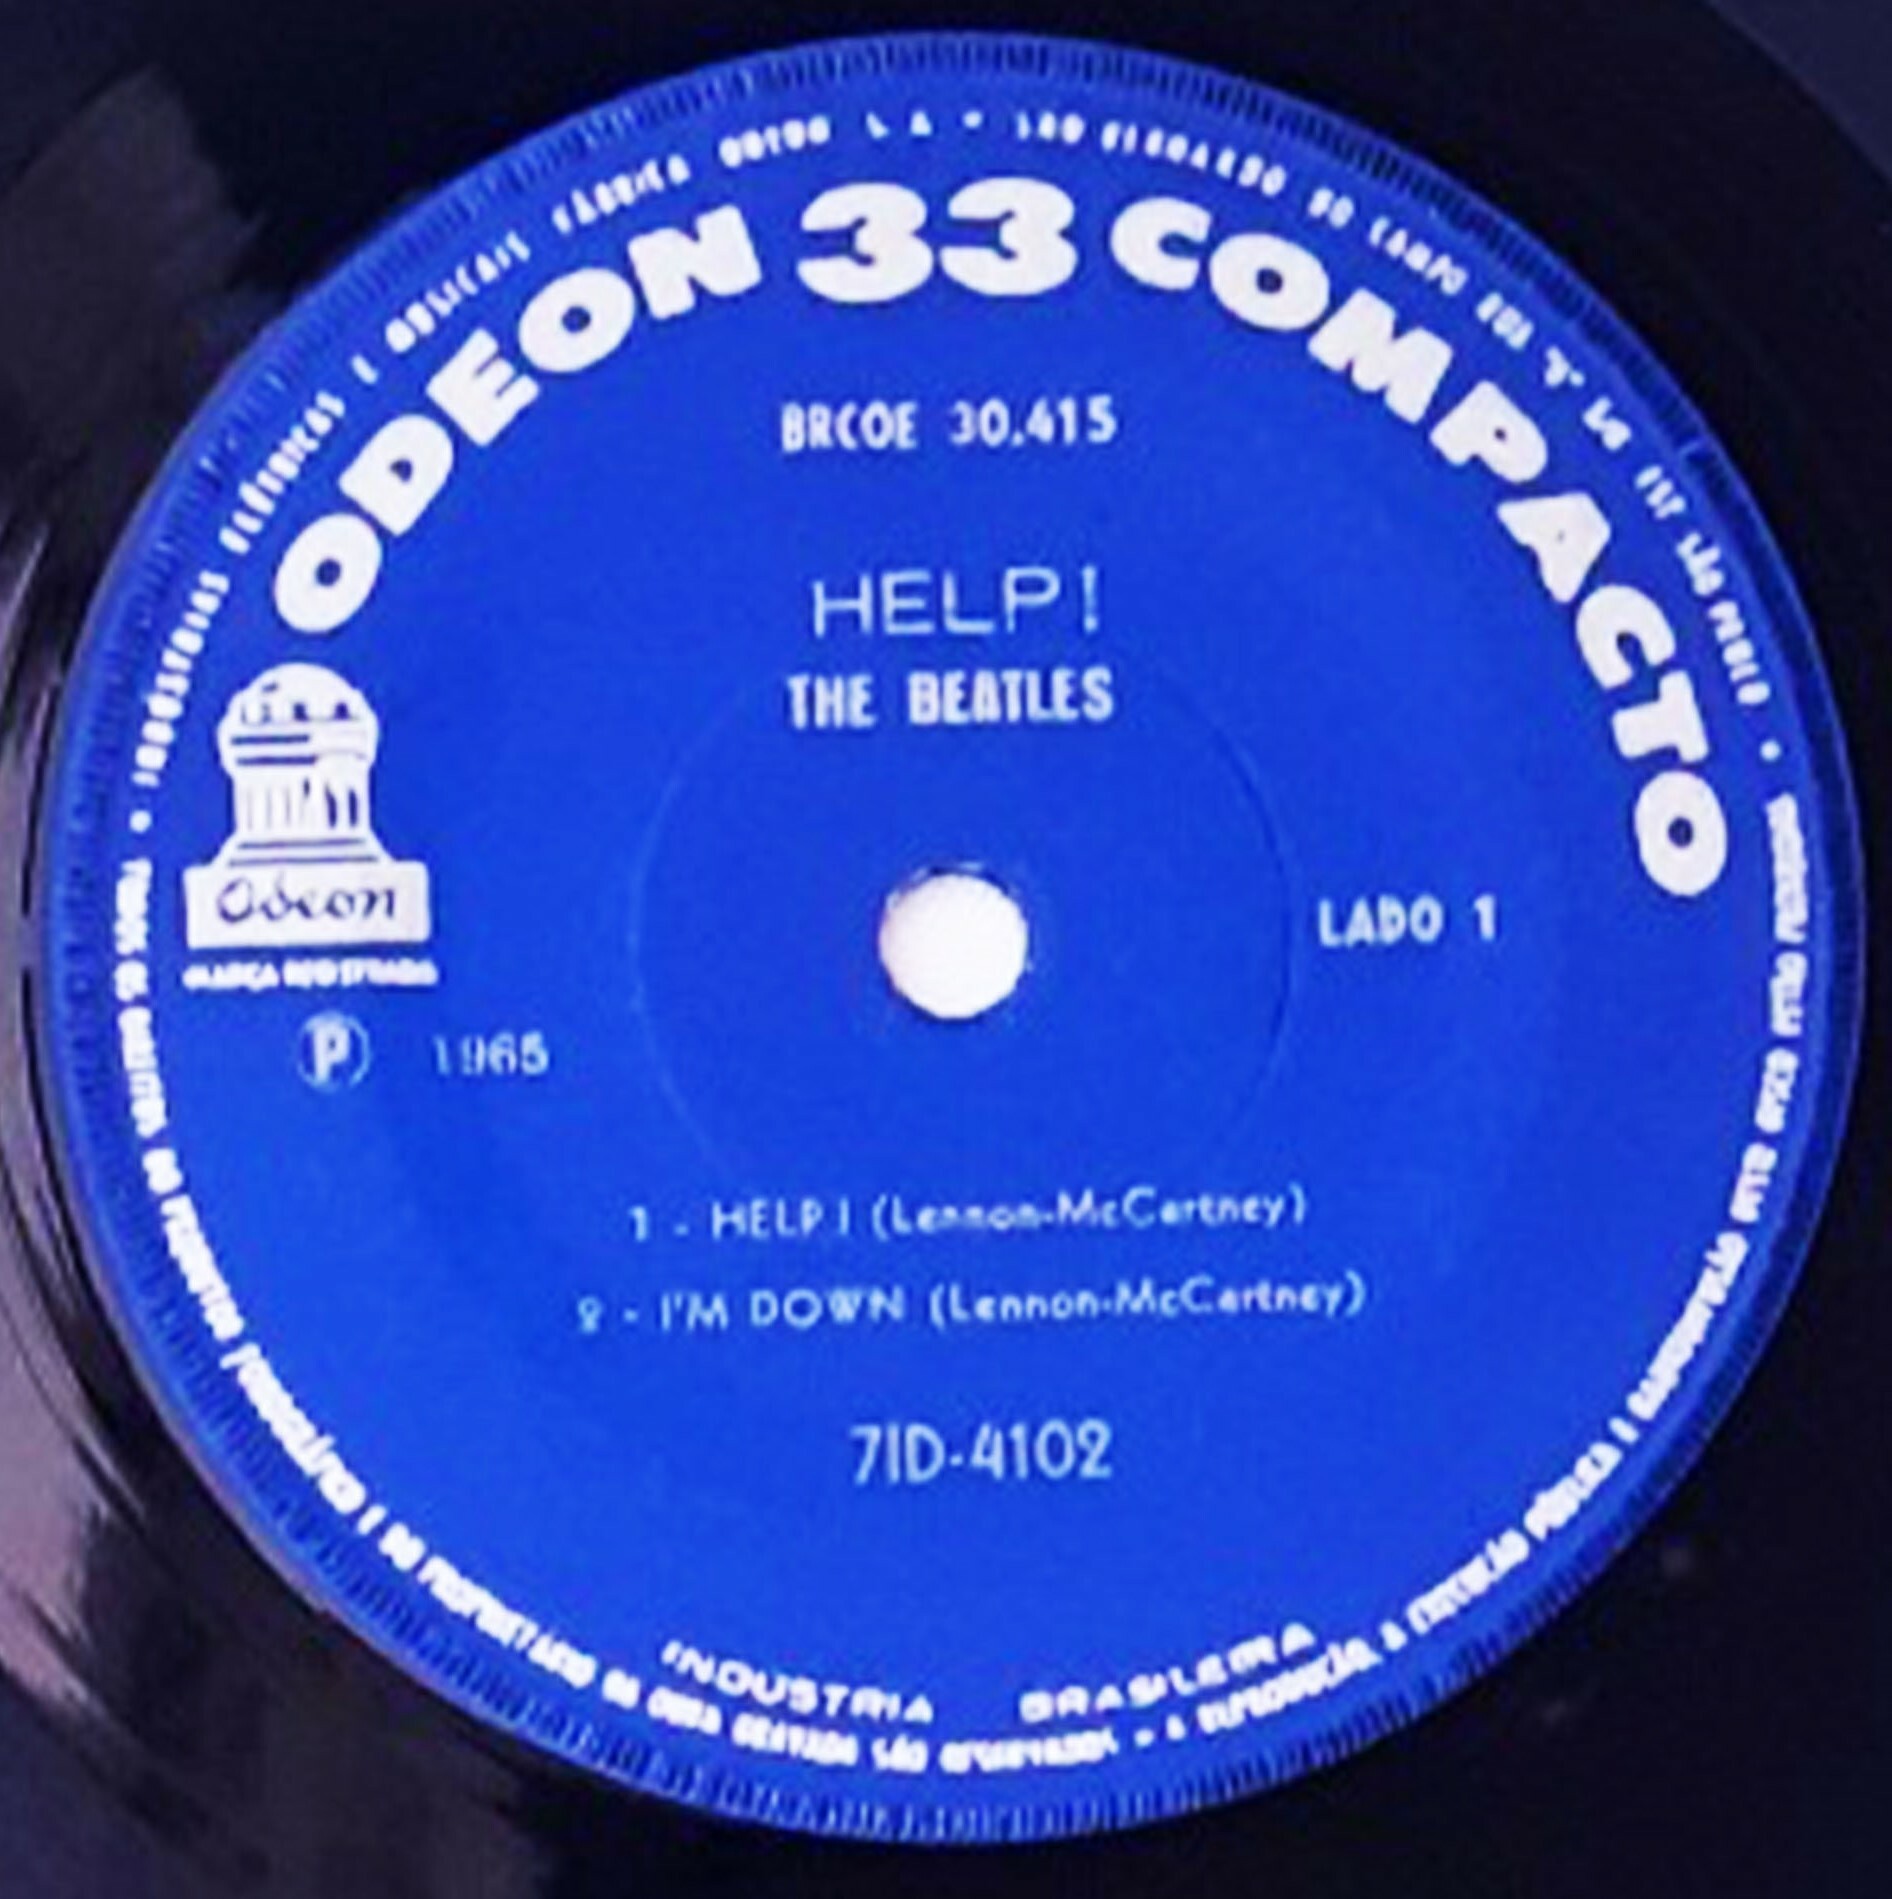 Vinil Compacto - Beatles the - Help